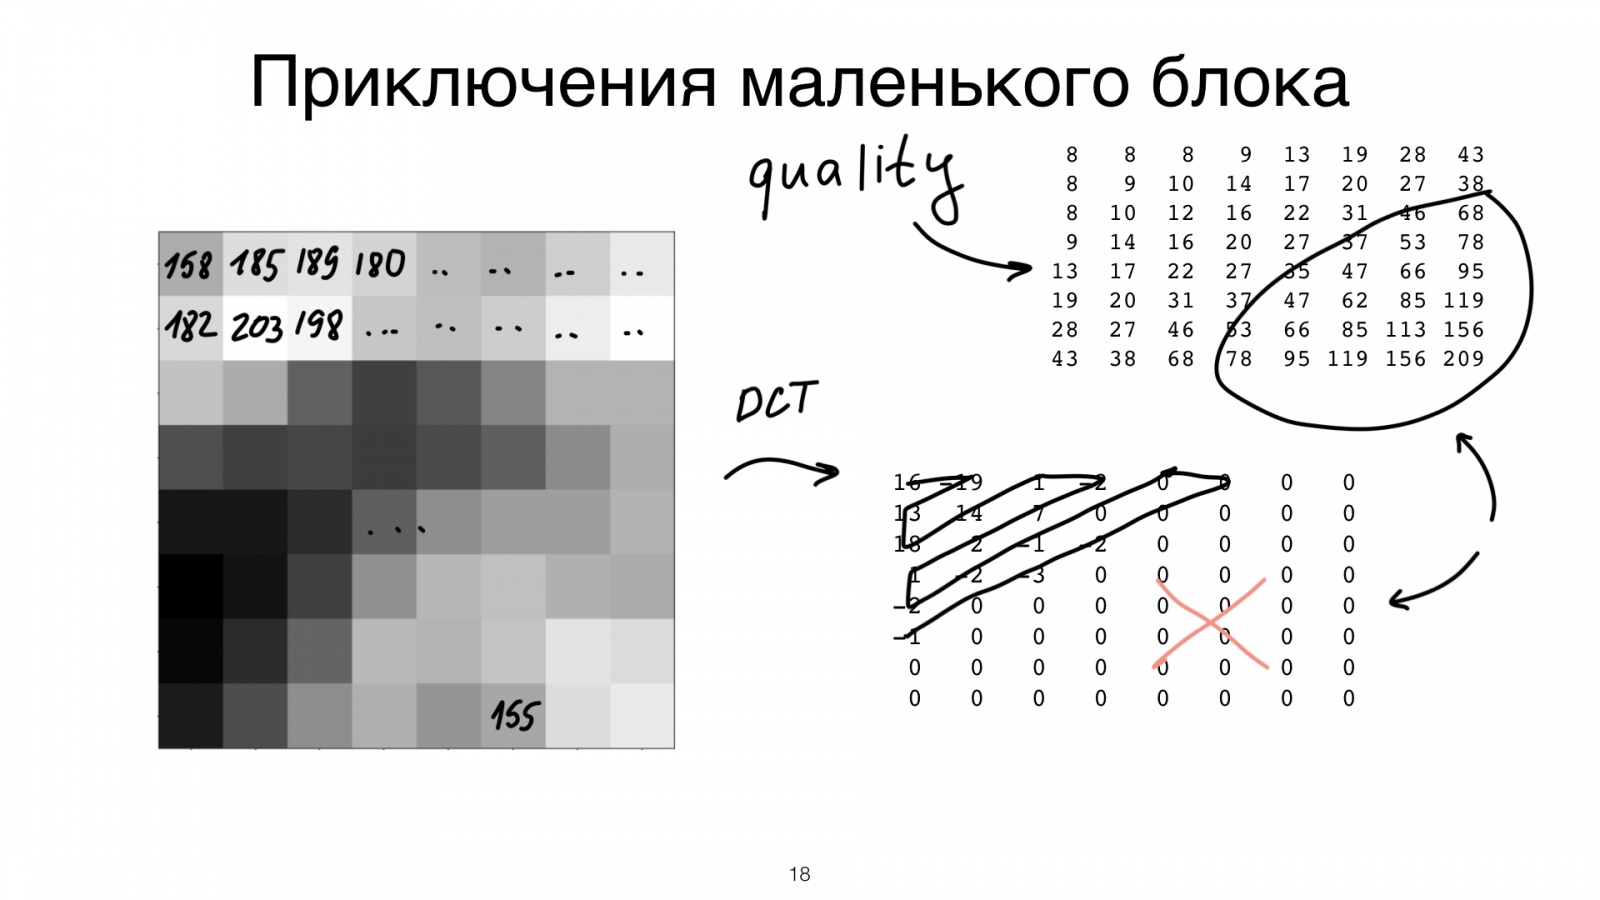 Картинки как коробки — что внутри? Доклад в Яндексе - 19